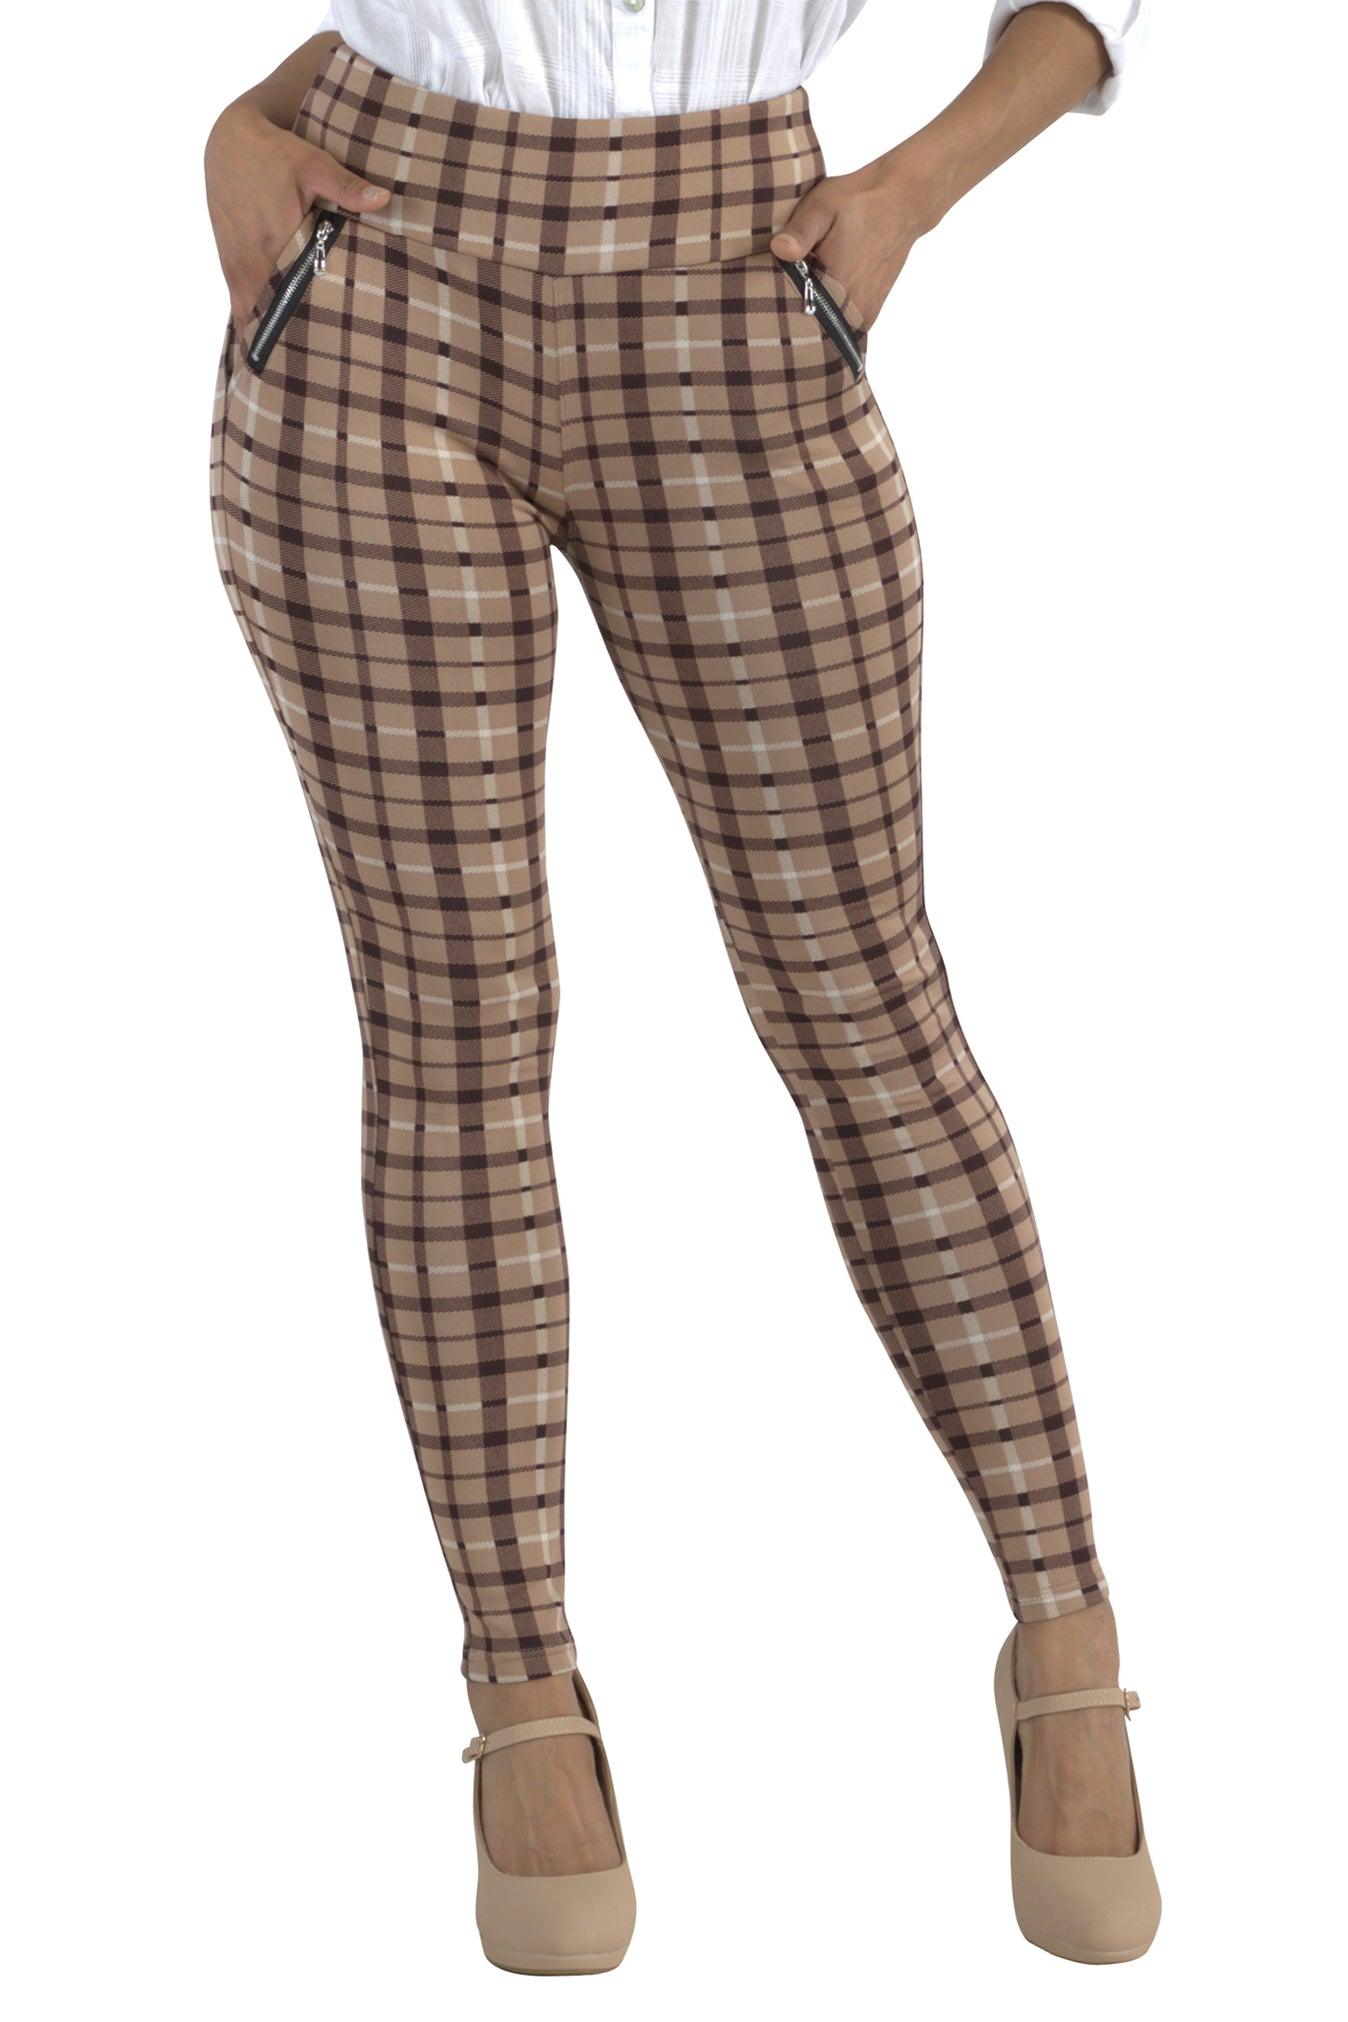 Tregging Skinny Pants With Zipper Pockets - Beige, Brown Plaid - SHOSHO Fashion